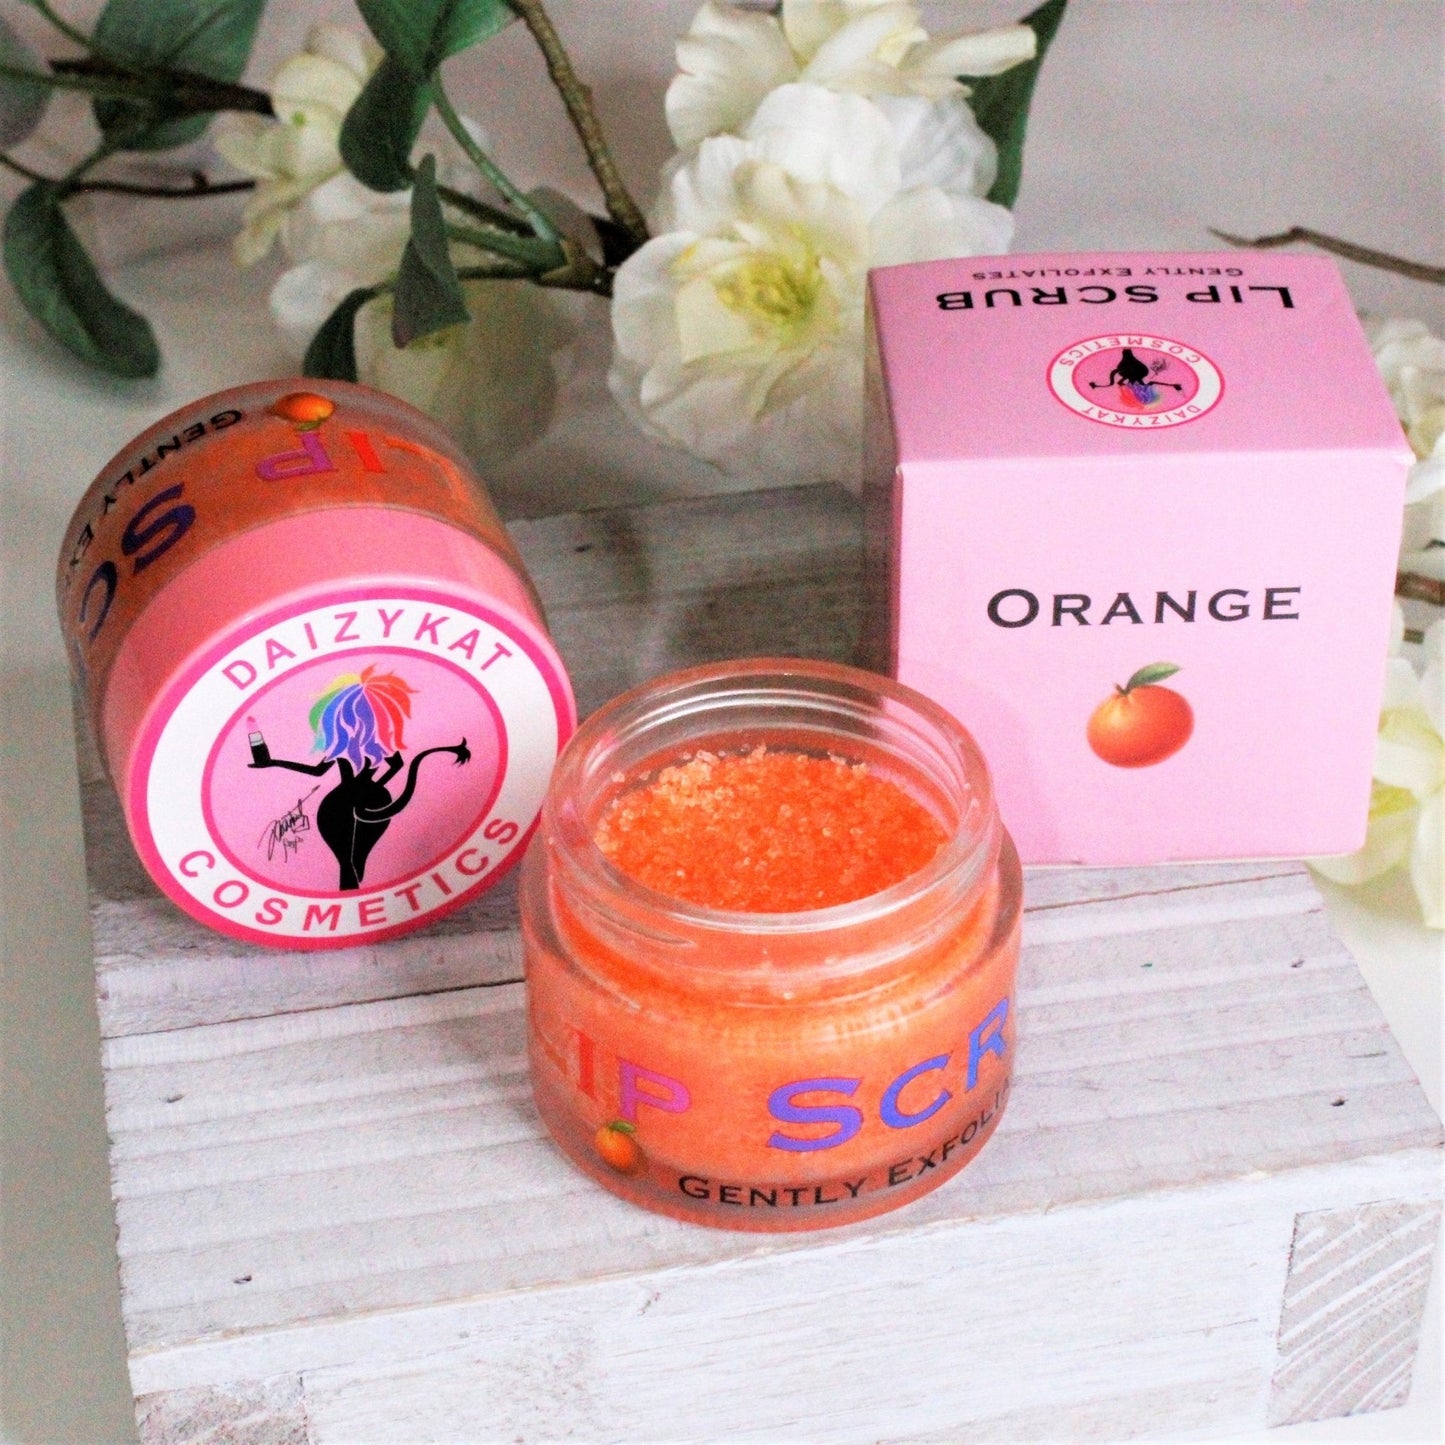 Orange Lip Scrub - DaizyKat Cosmetics Orange Lip Scrub DaizyKat Cosmetics Lip Scrub